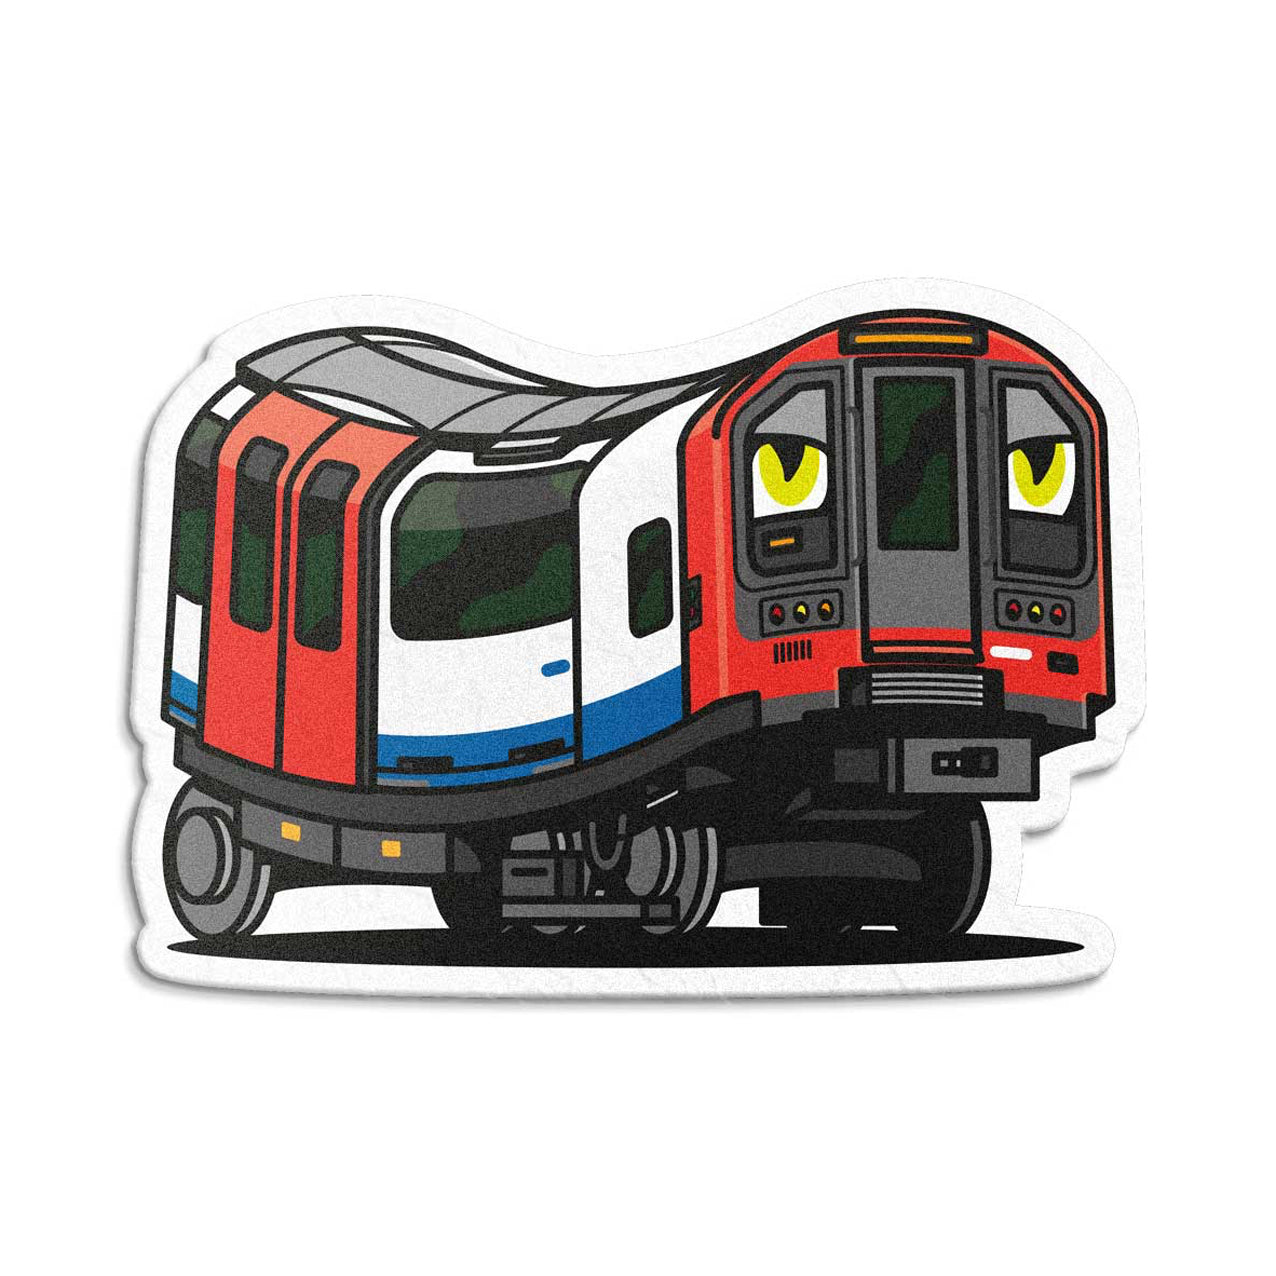 Vandals on Holidays / London Tube Magnet